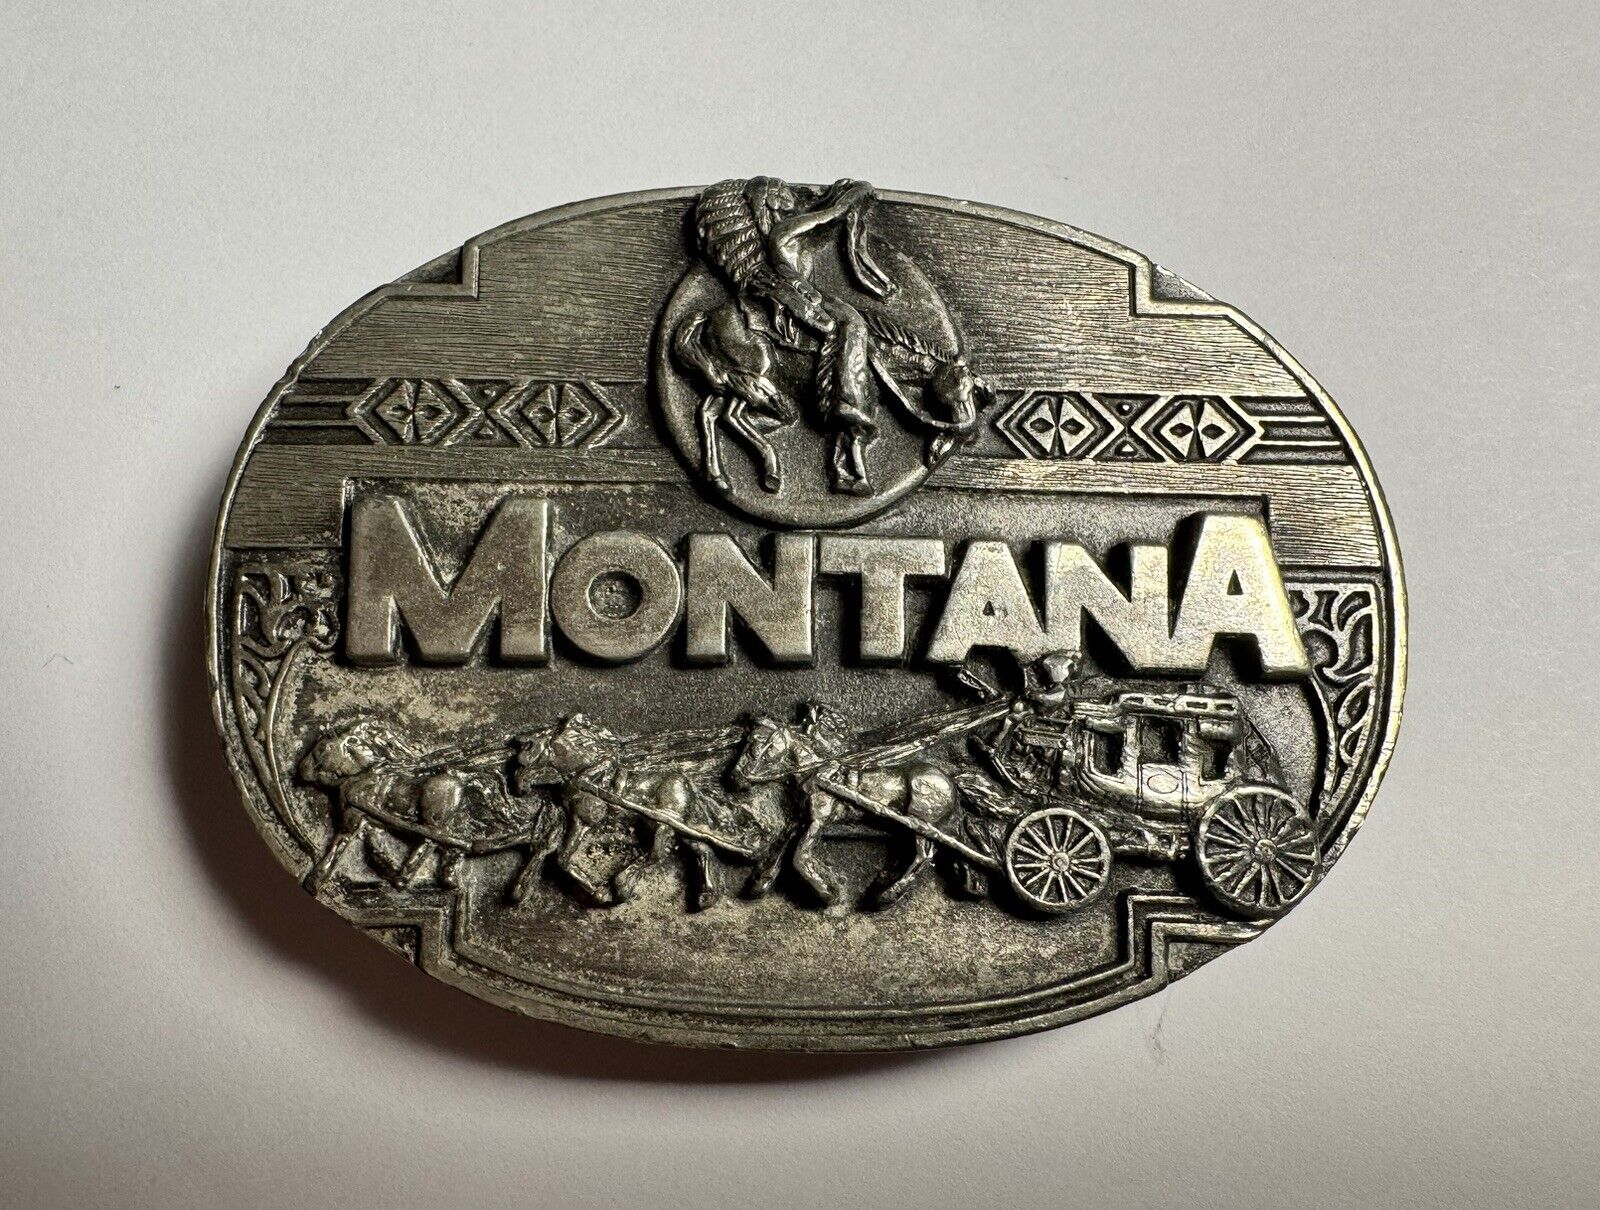 “Montana” Siskiyou Belt Buckle (1990)